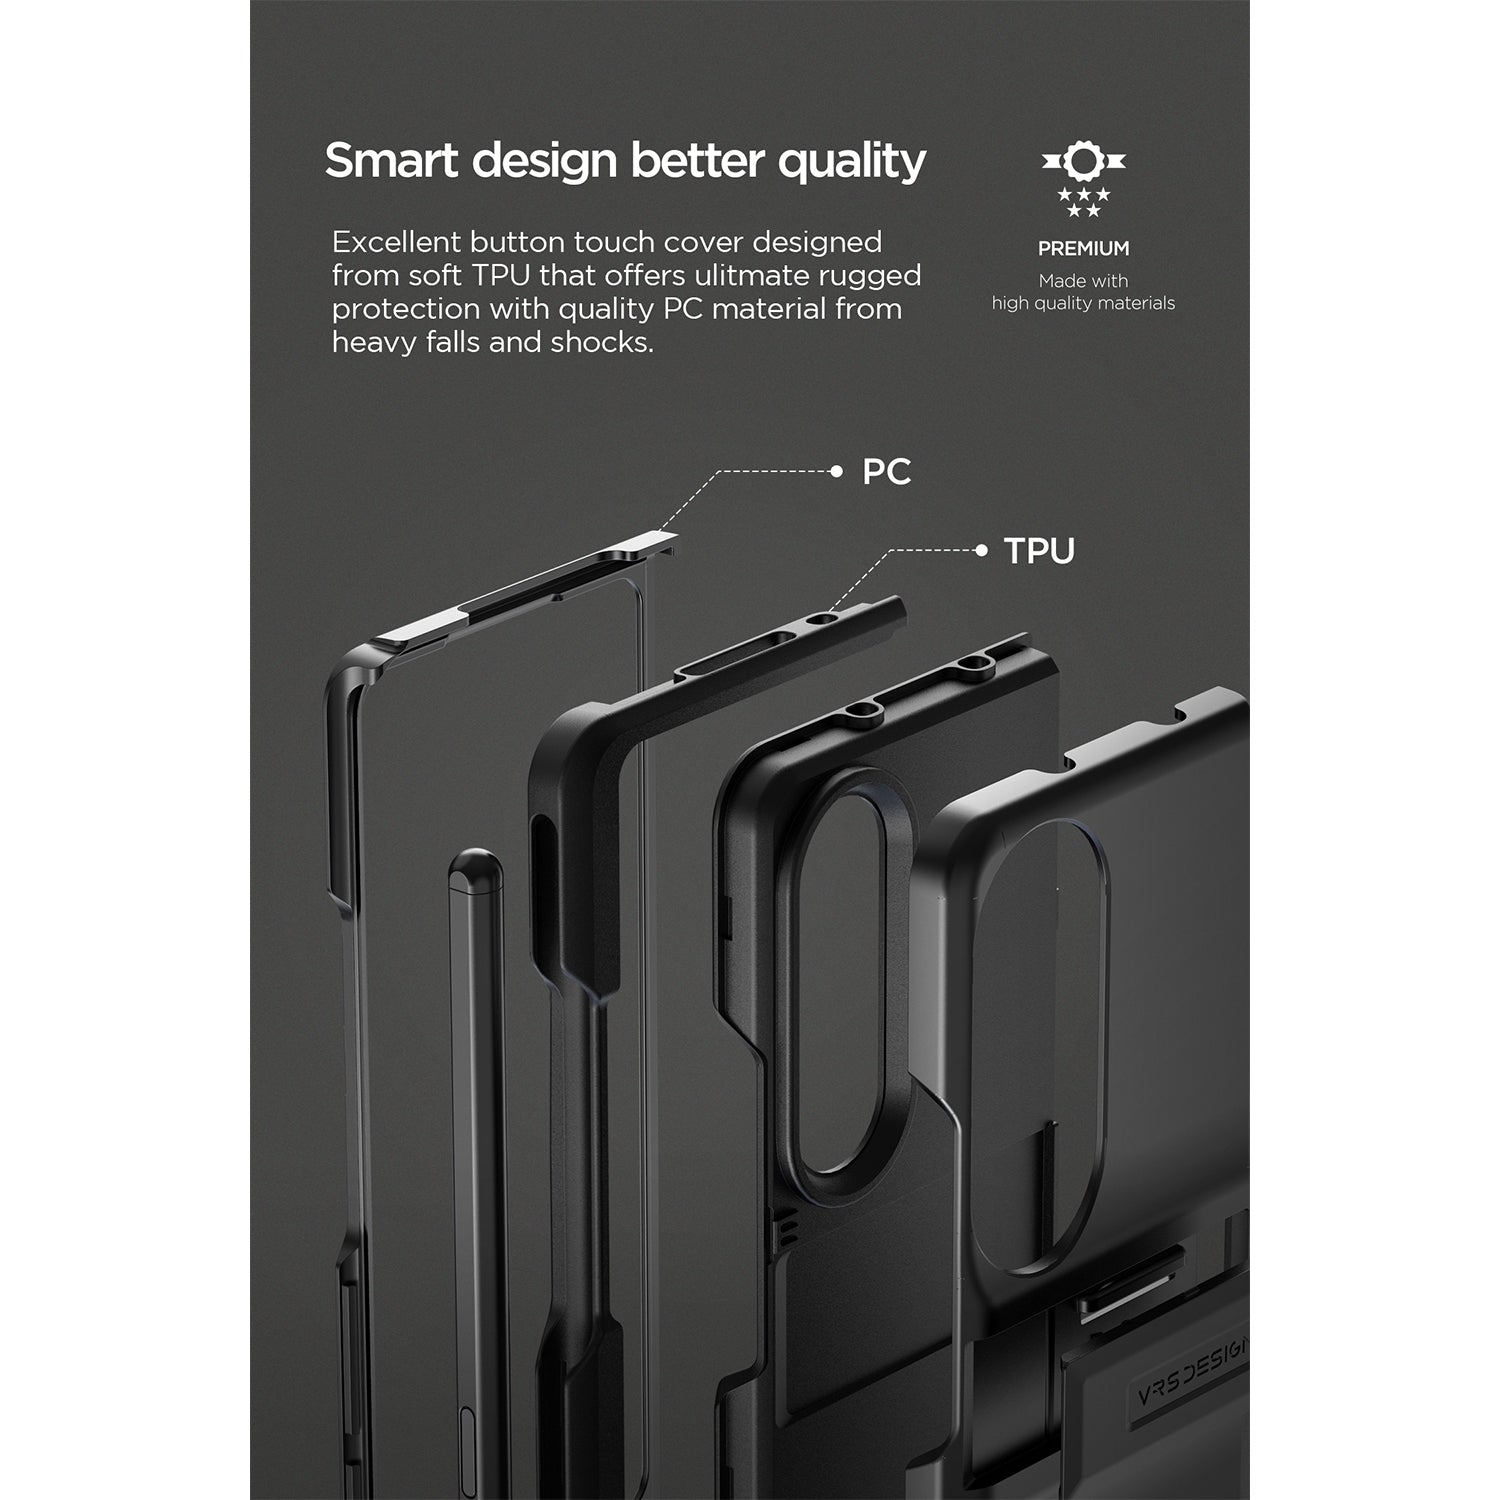 VRS Design QuickStand Modern Pro Case for Samsung Galaxy Z Fold 4 Samsung Case VRS Design 